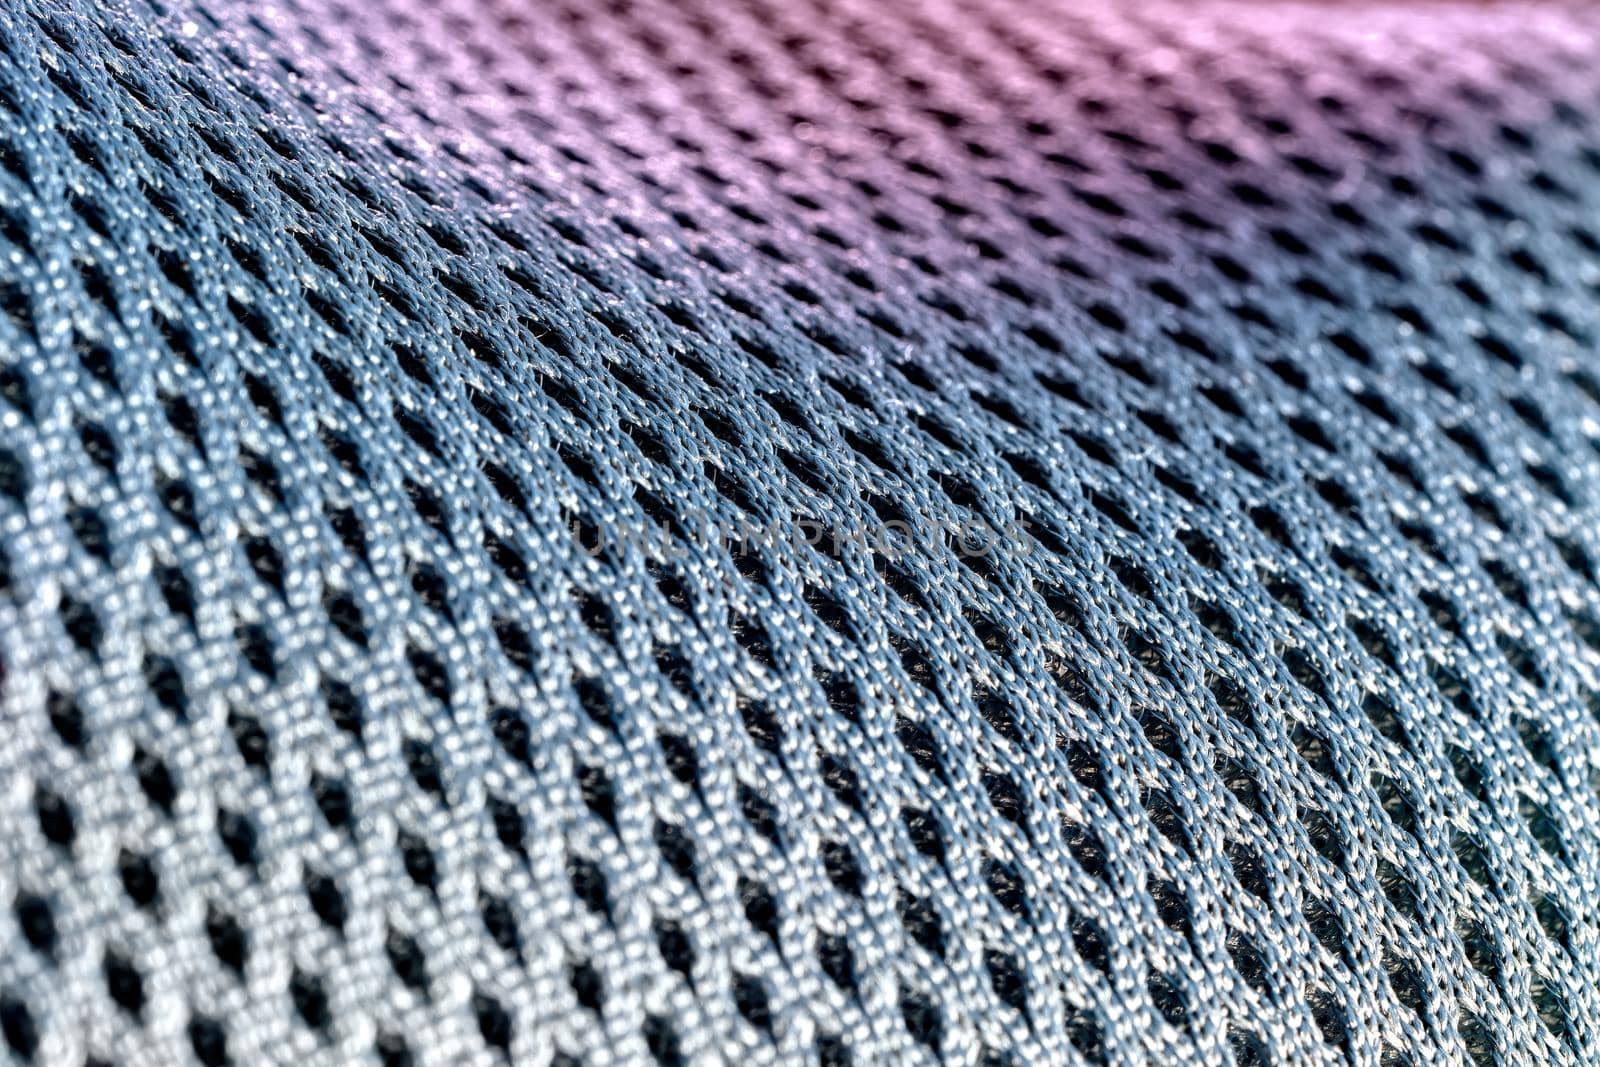 Macro shot of a mesh-like undulating gray-silvery purple surface by silent303